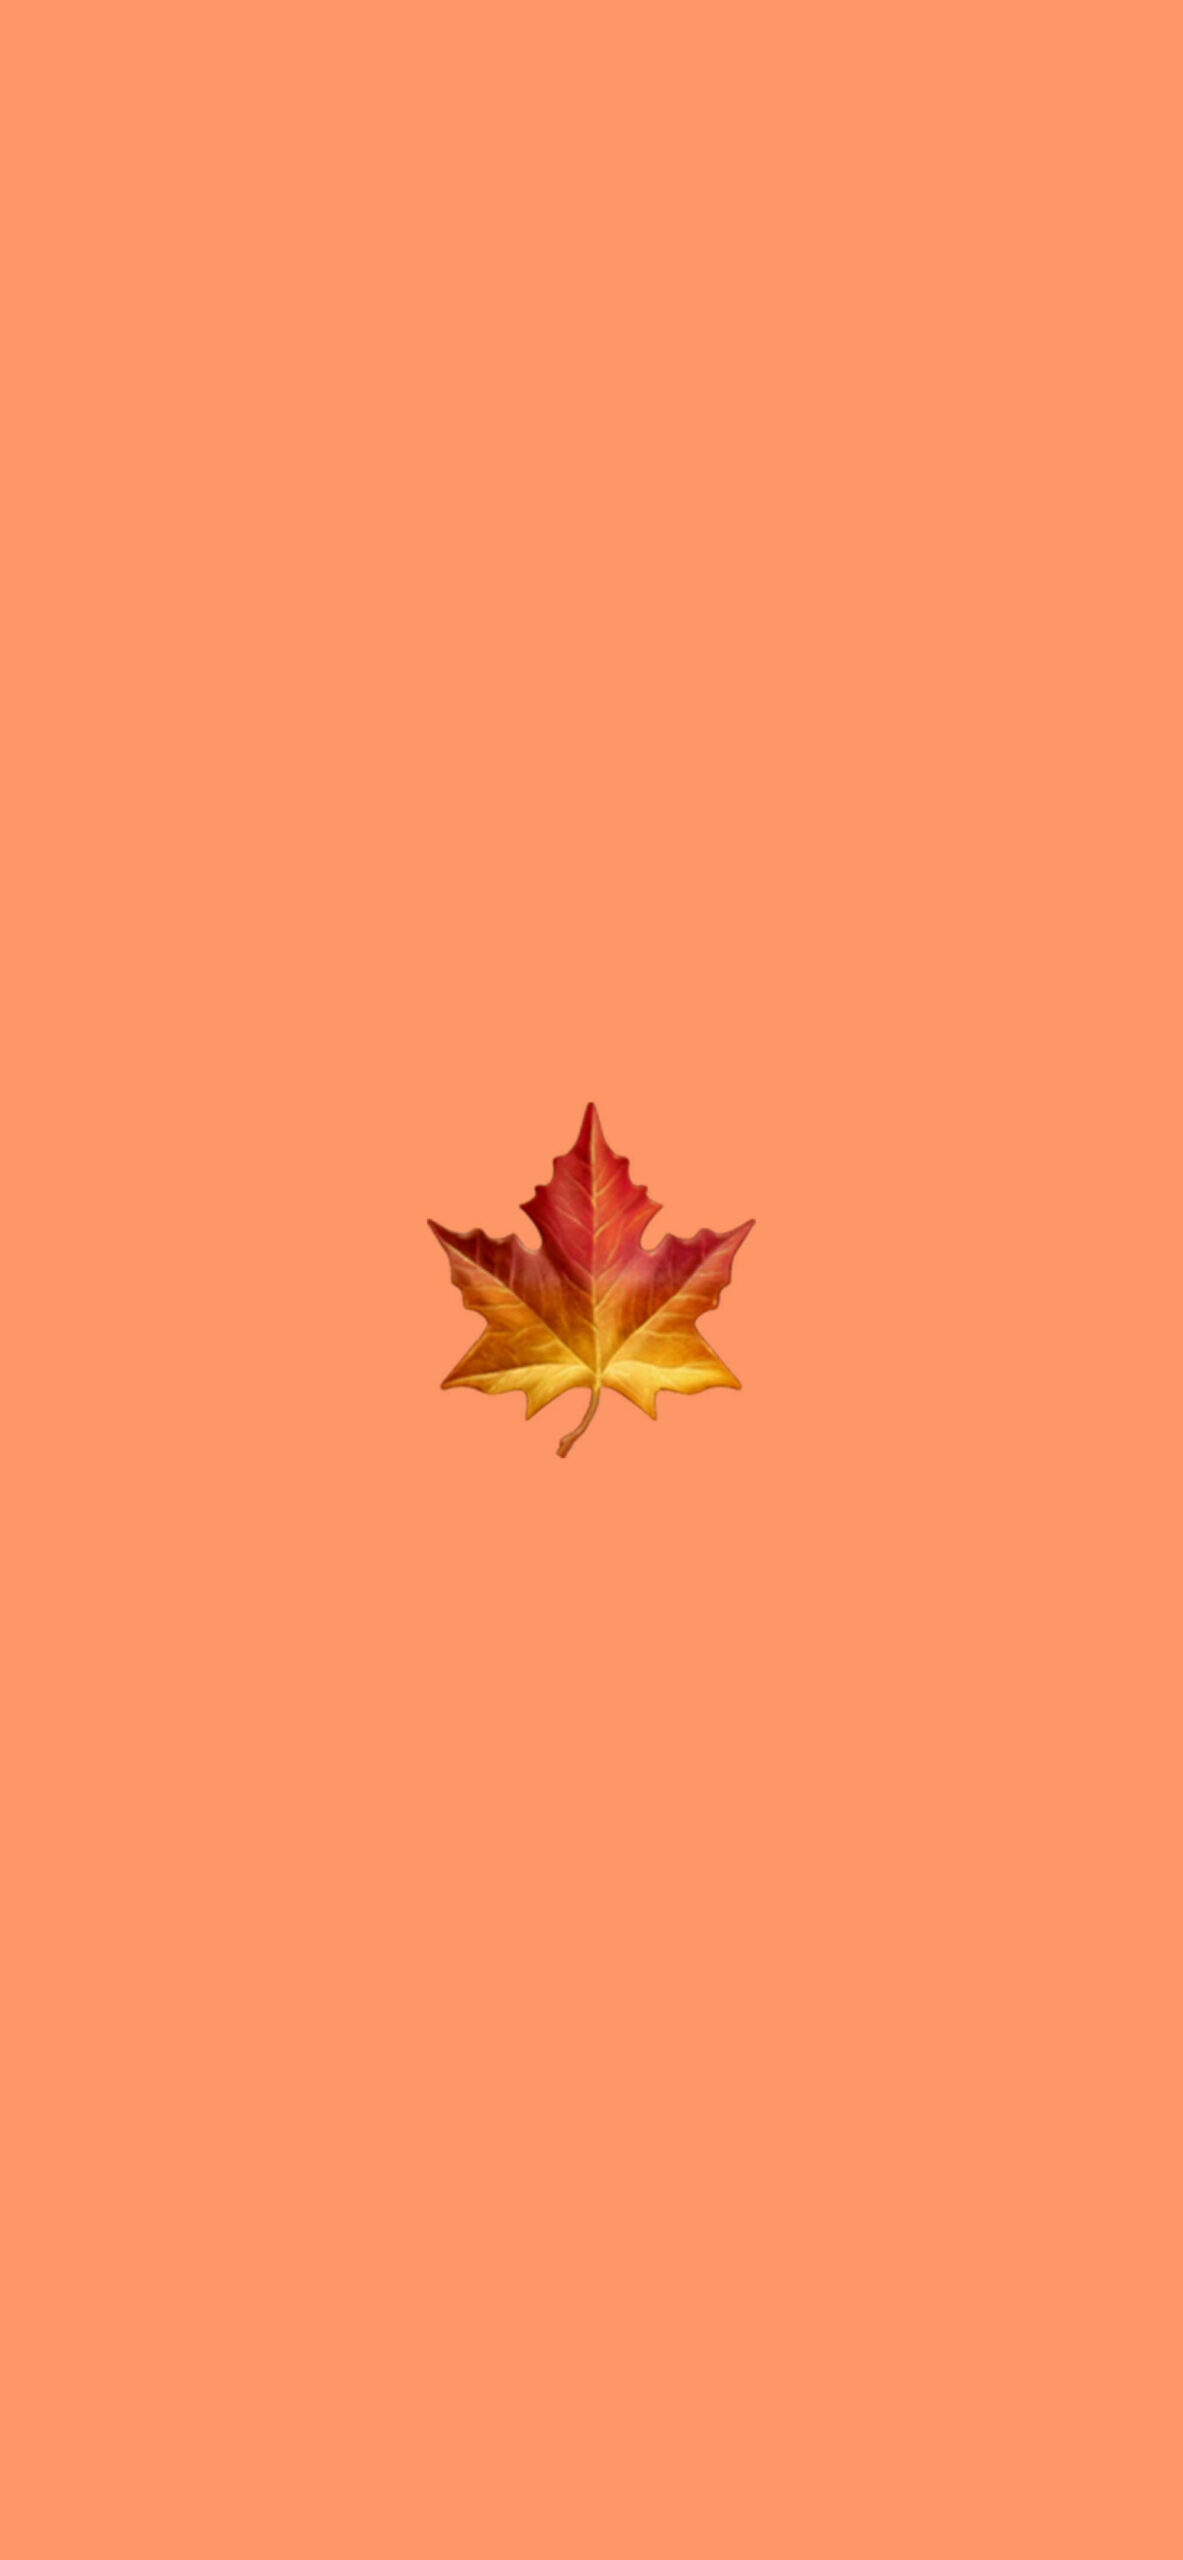 A colorful leaf on a solid orange background - Leaves, Emoji